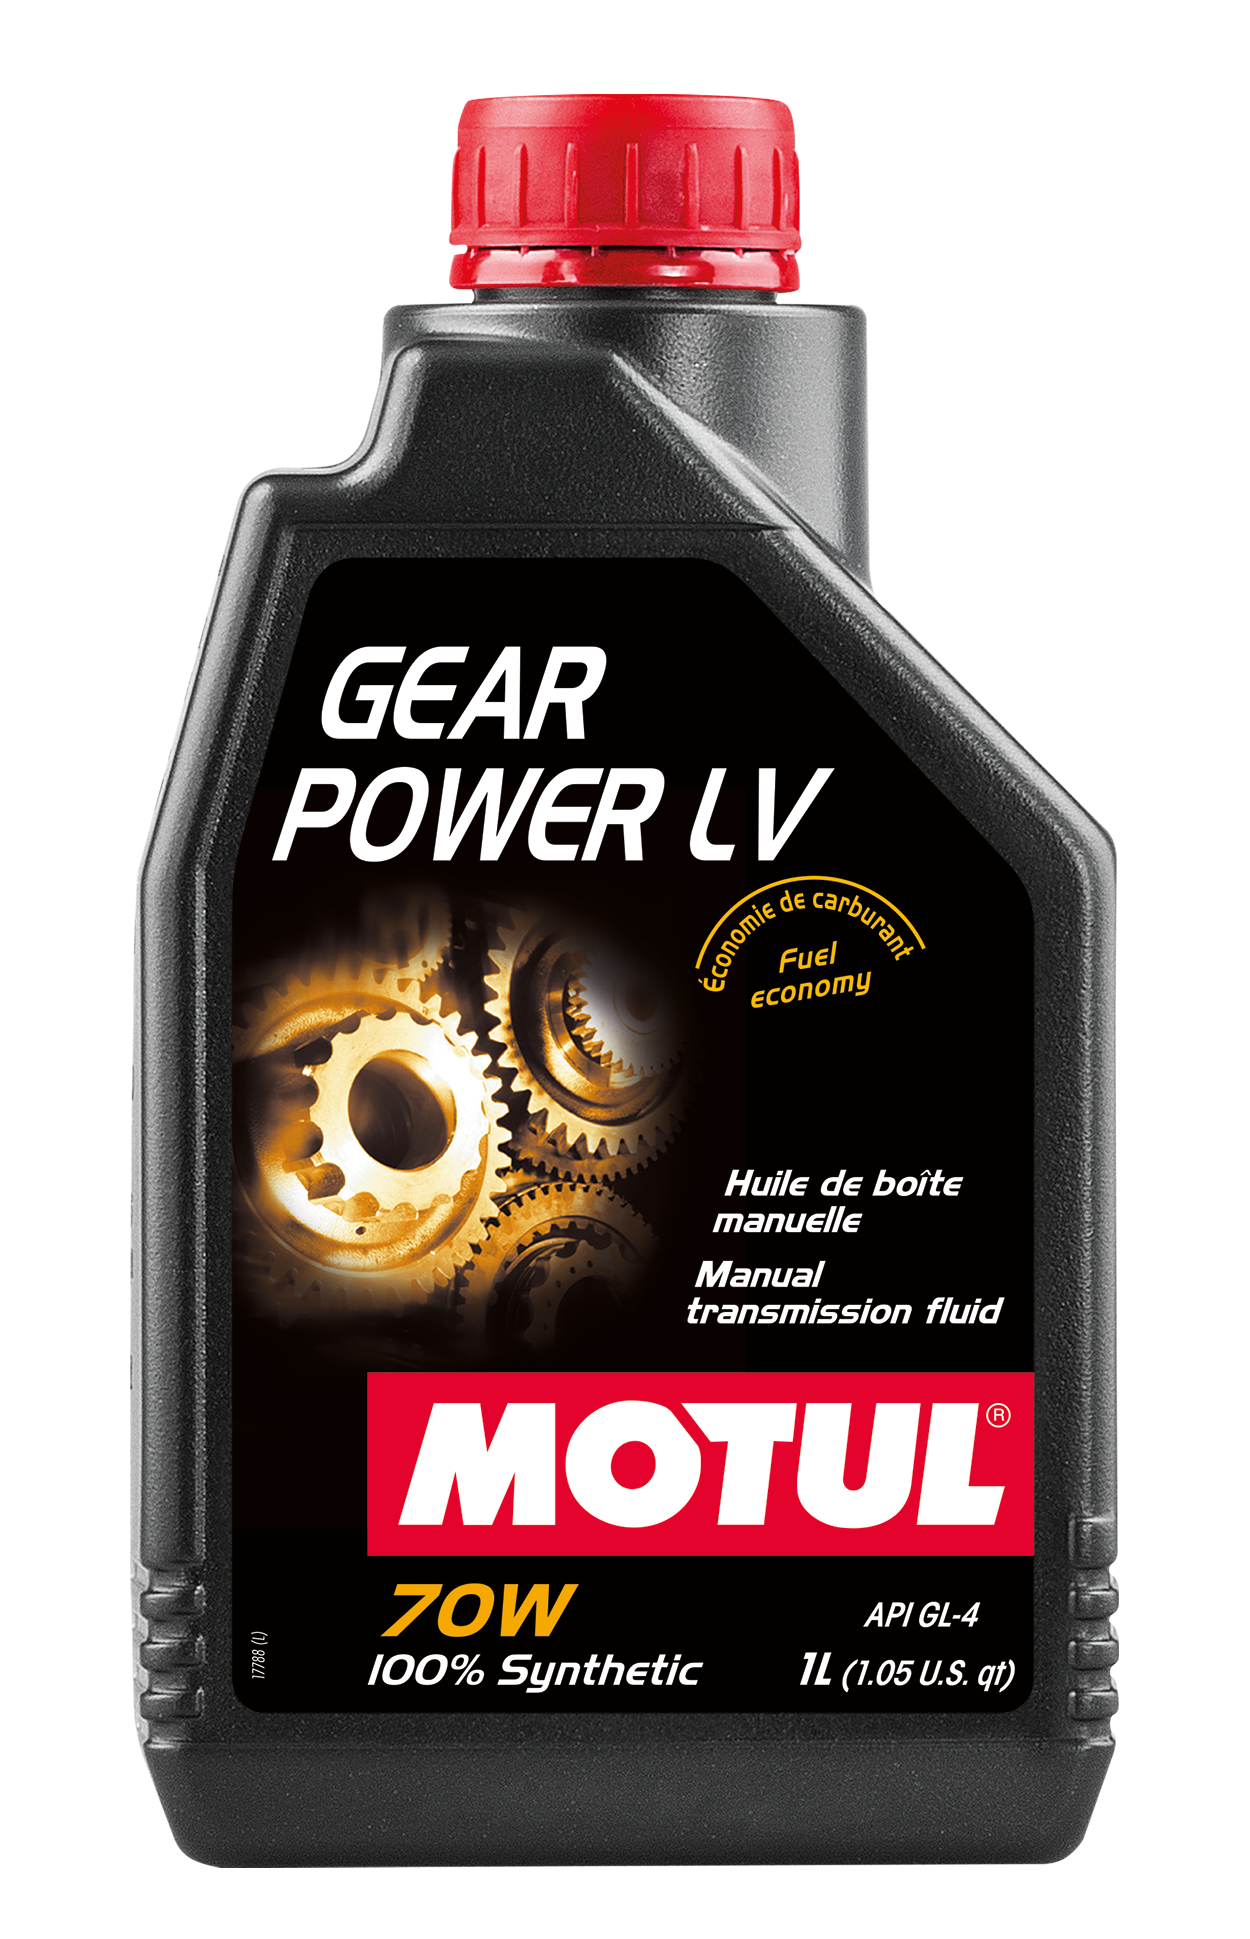 MOTUL Gear Power LV SAE 70W